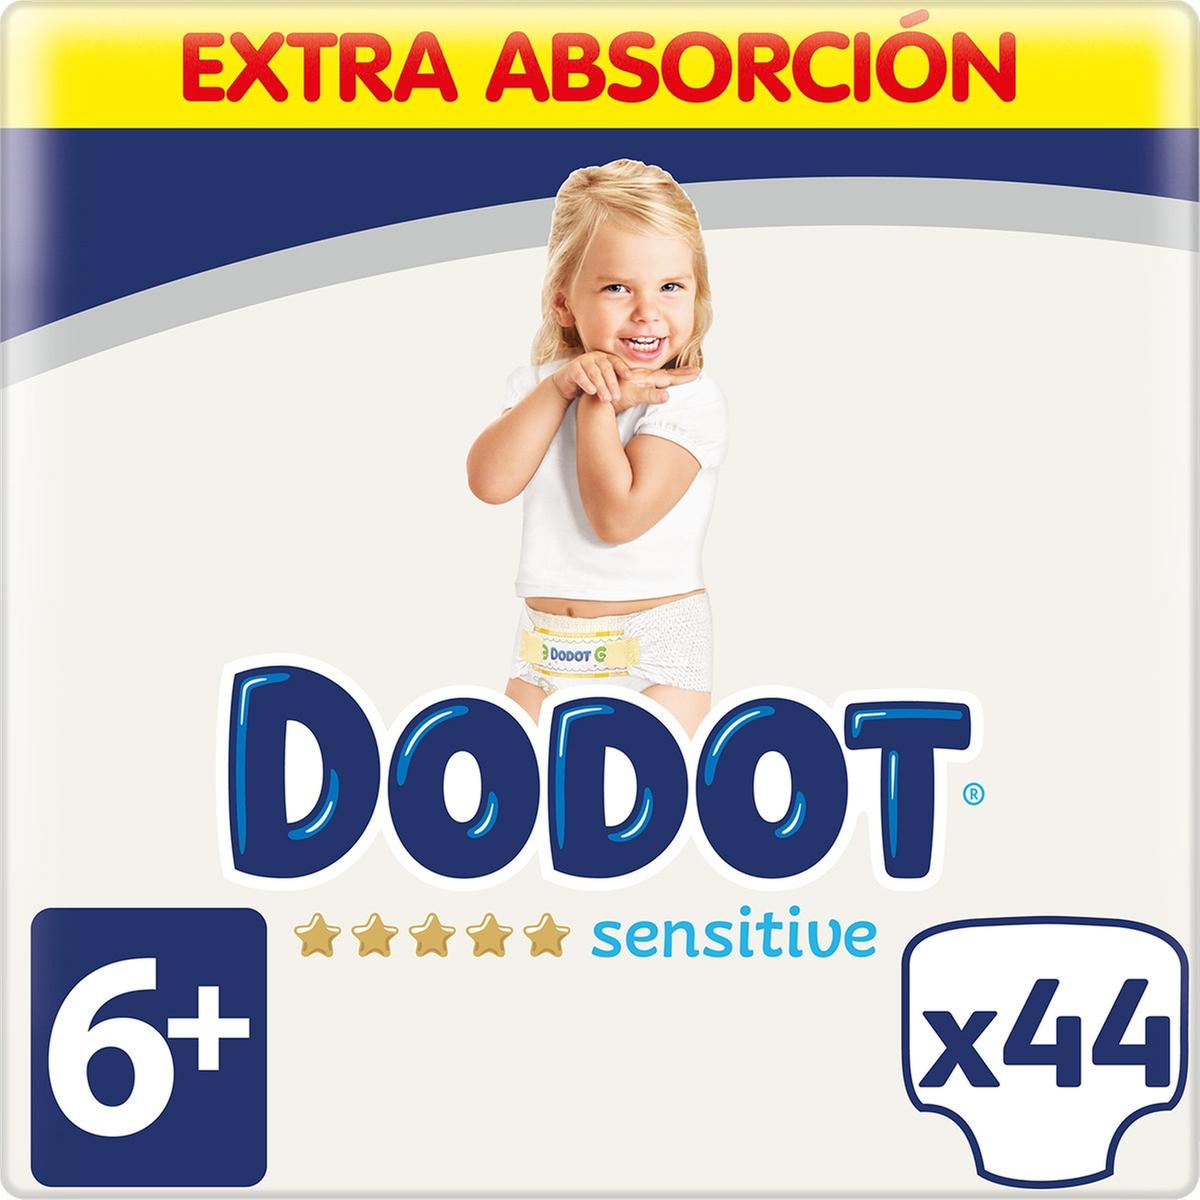 Fraldas Dodot sensitive 1 Longroiva • OLX Portugal